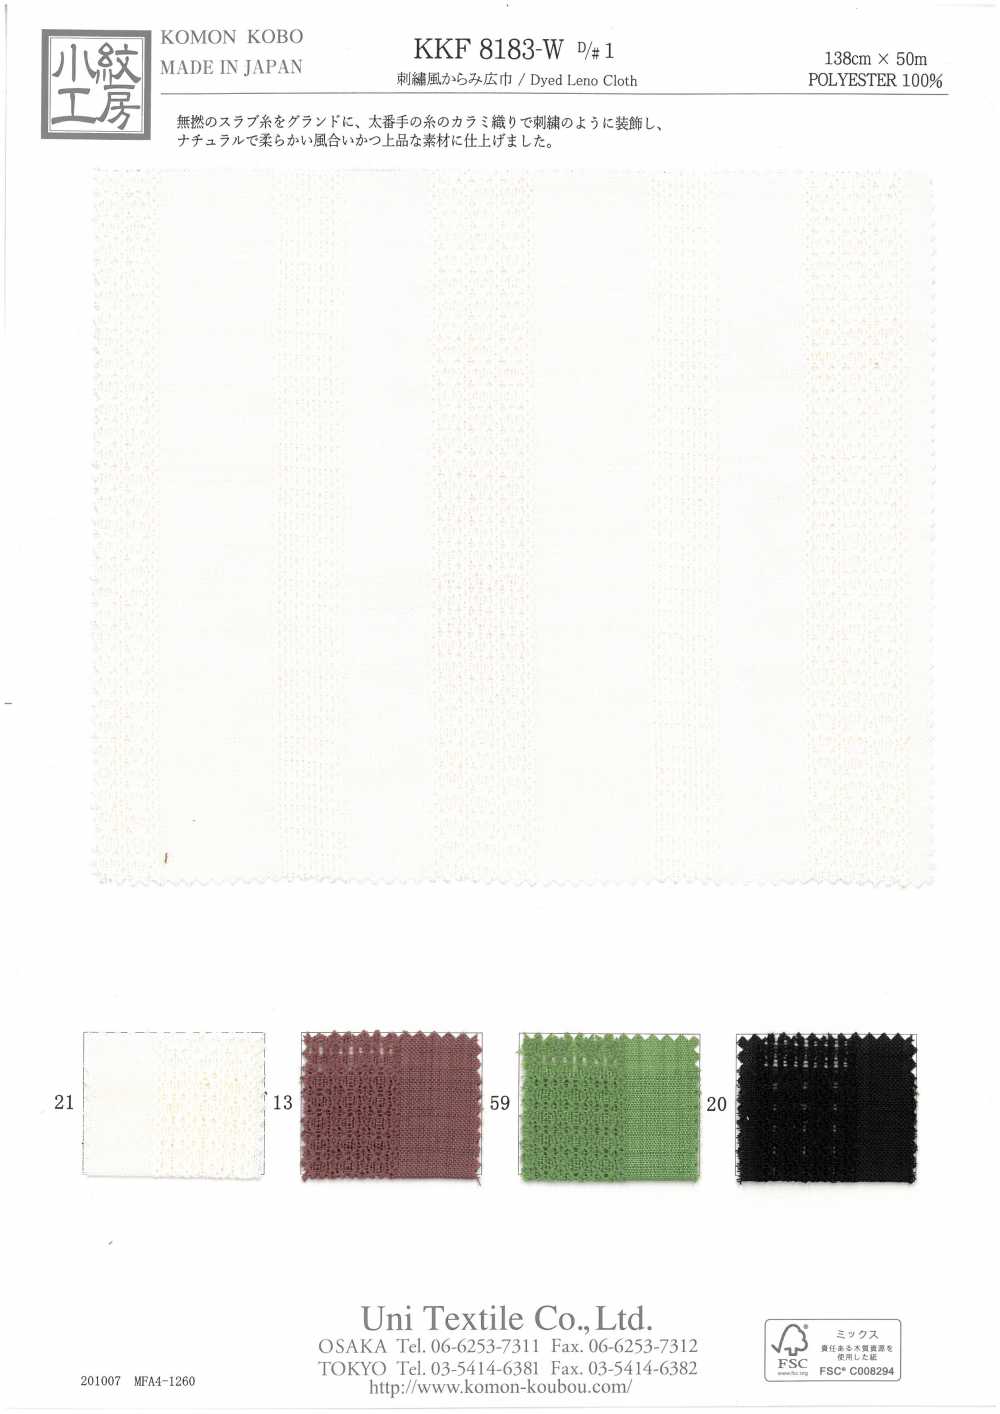 KKF8183-W-D/1 Estilo De Bordado Ancho Ancho[Fabrica Textil] Uni Textile